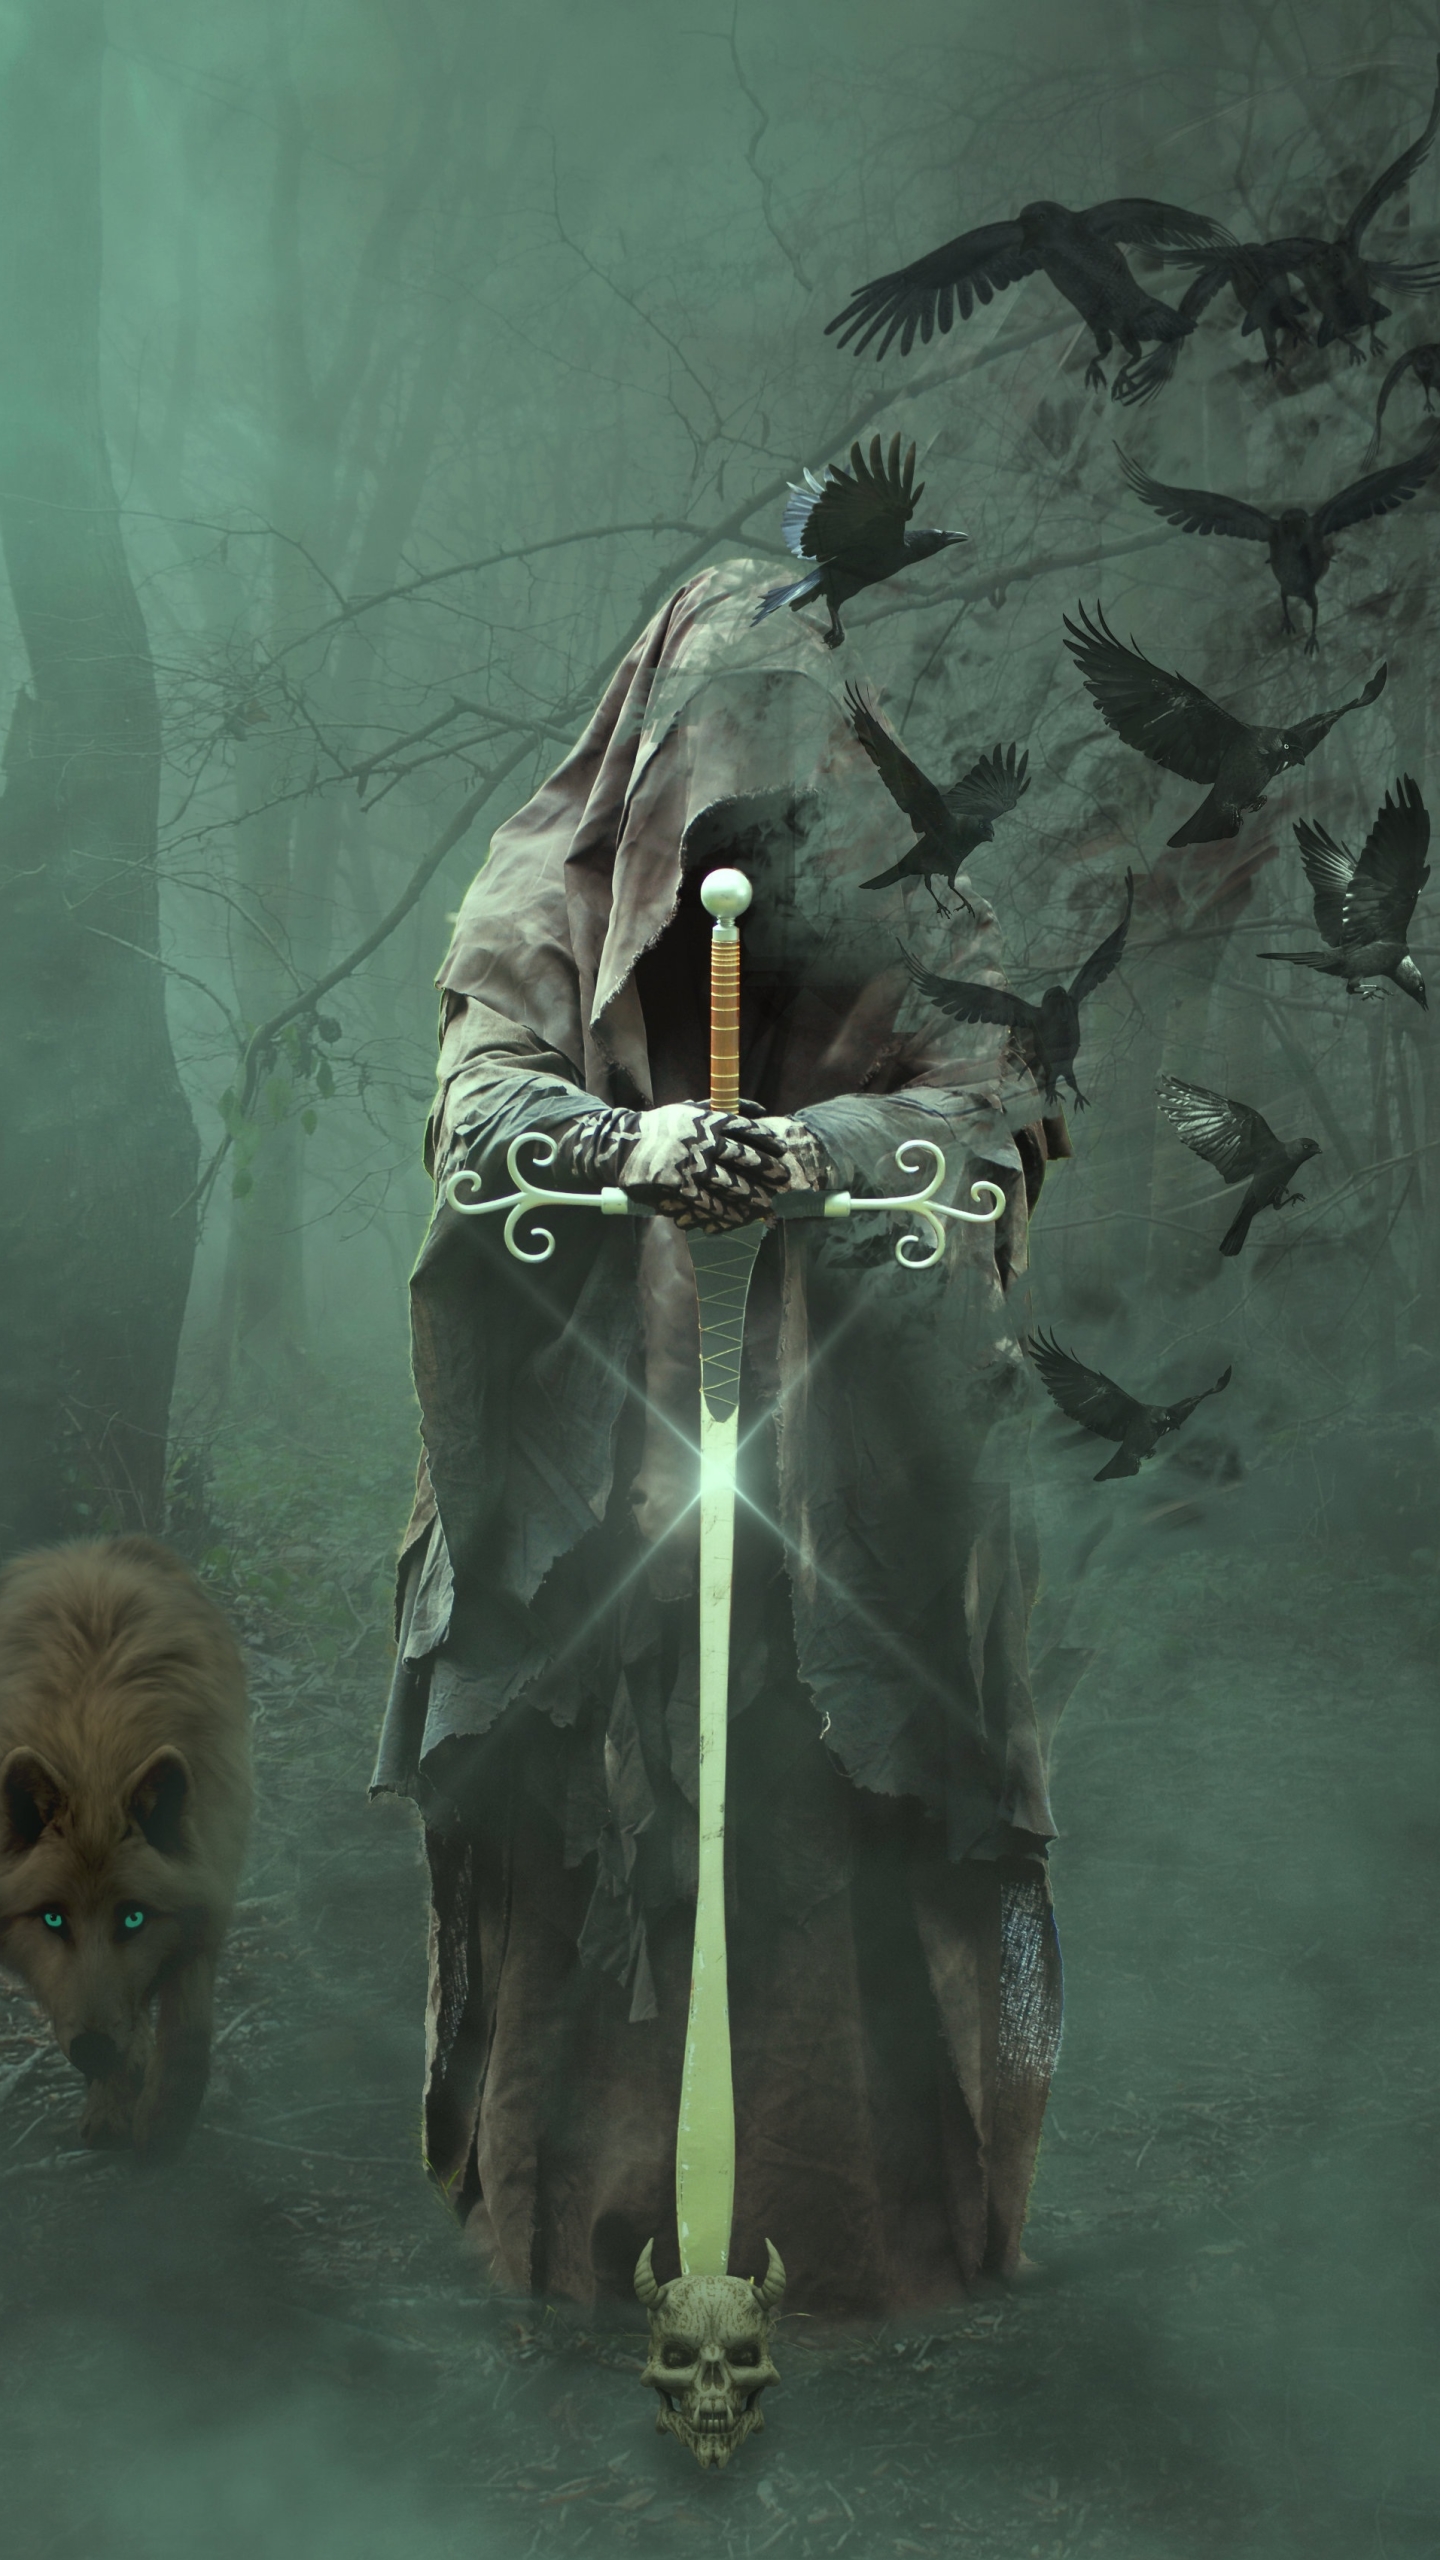 Wizard of Death in a Dark Forest by Lothar Dieterich